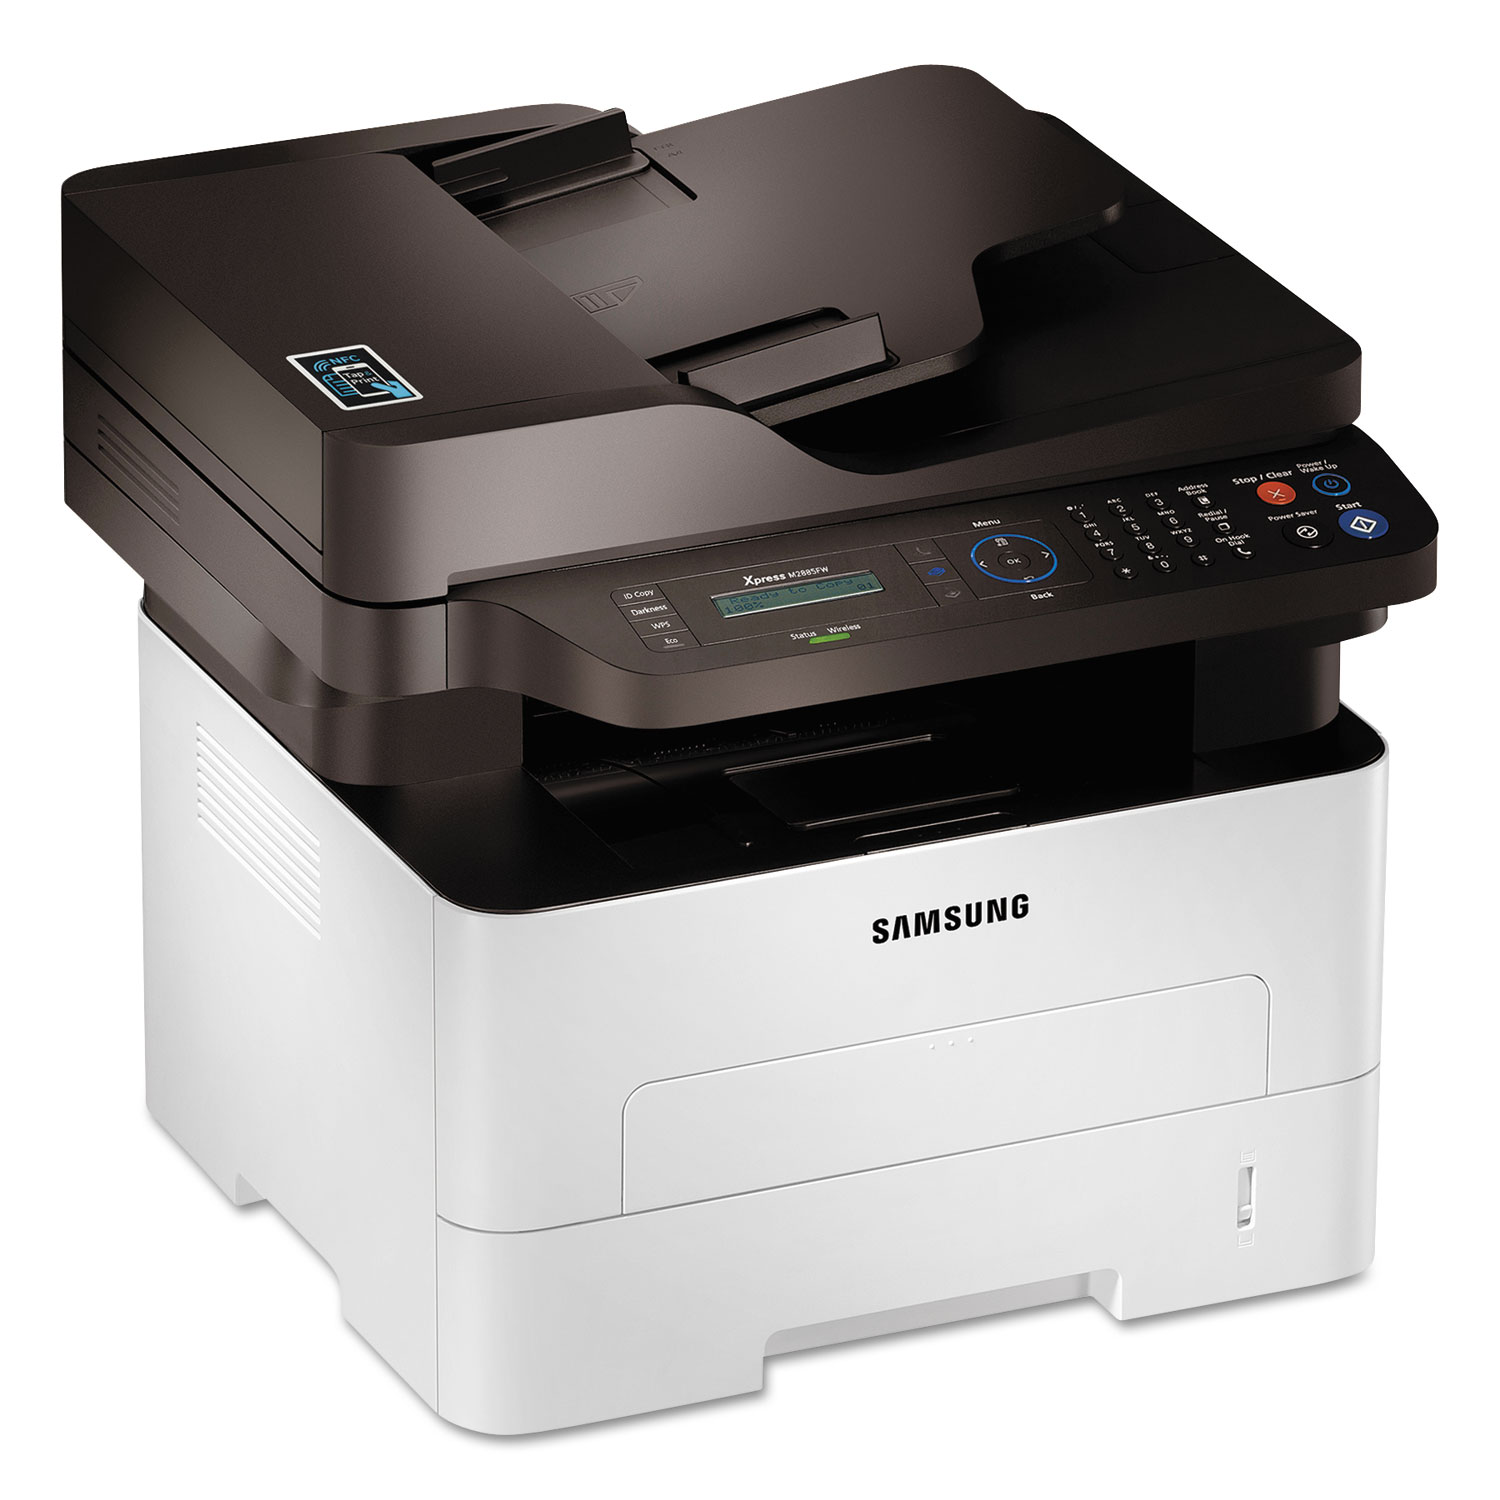 SL-M2885FW Multifunction Laser Printer, Copy/Fax/Print/Scan